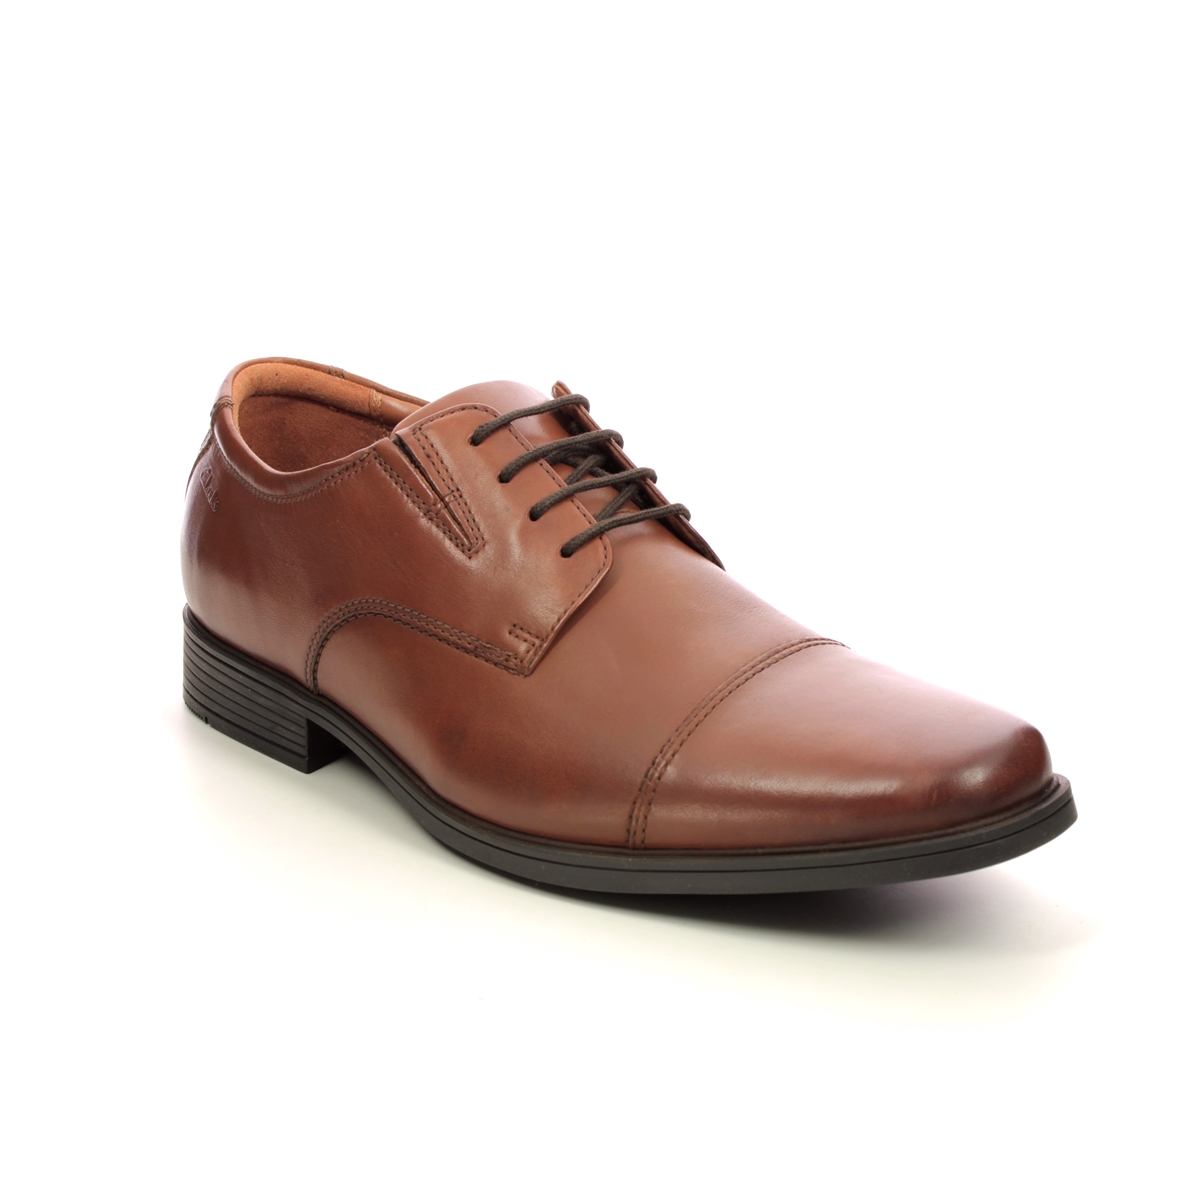 Clarks Tilden Cap Dark Tan Mens Formal Shoes 300968H In Size 7.5 In Plain Dark Tan H Width Fitting Extra Wide